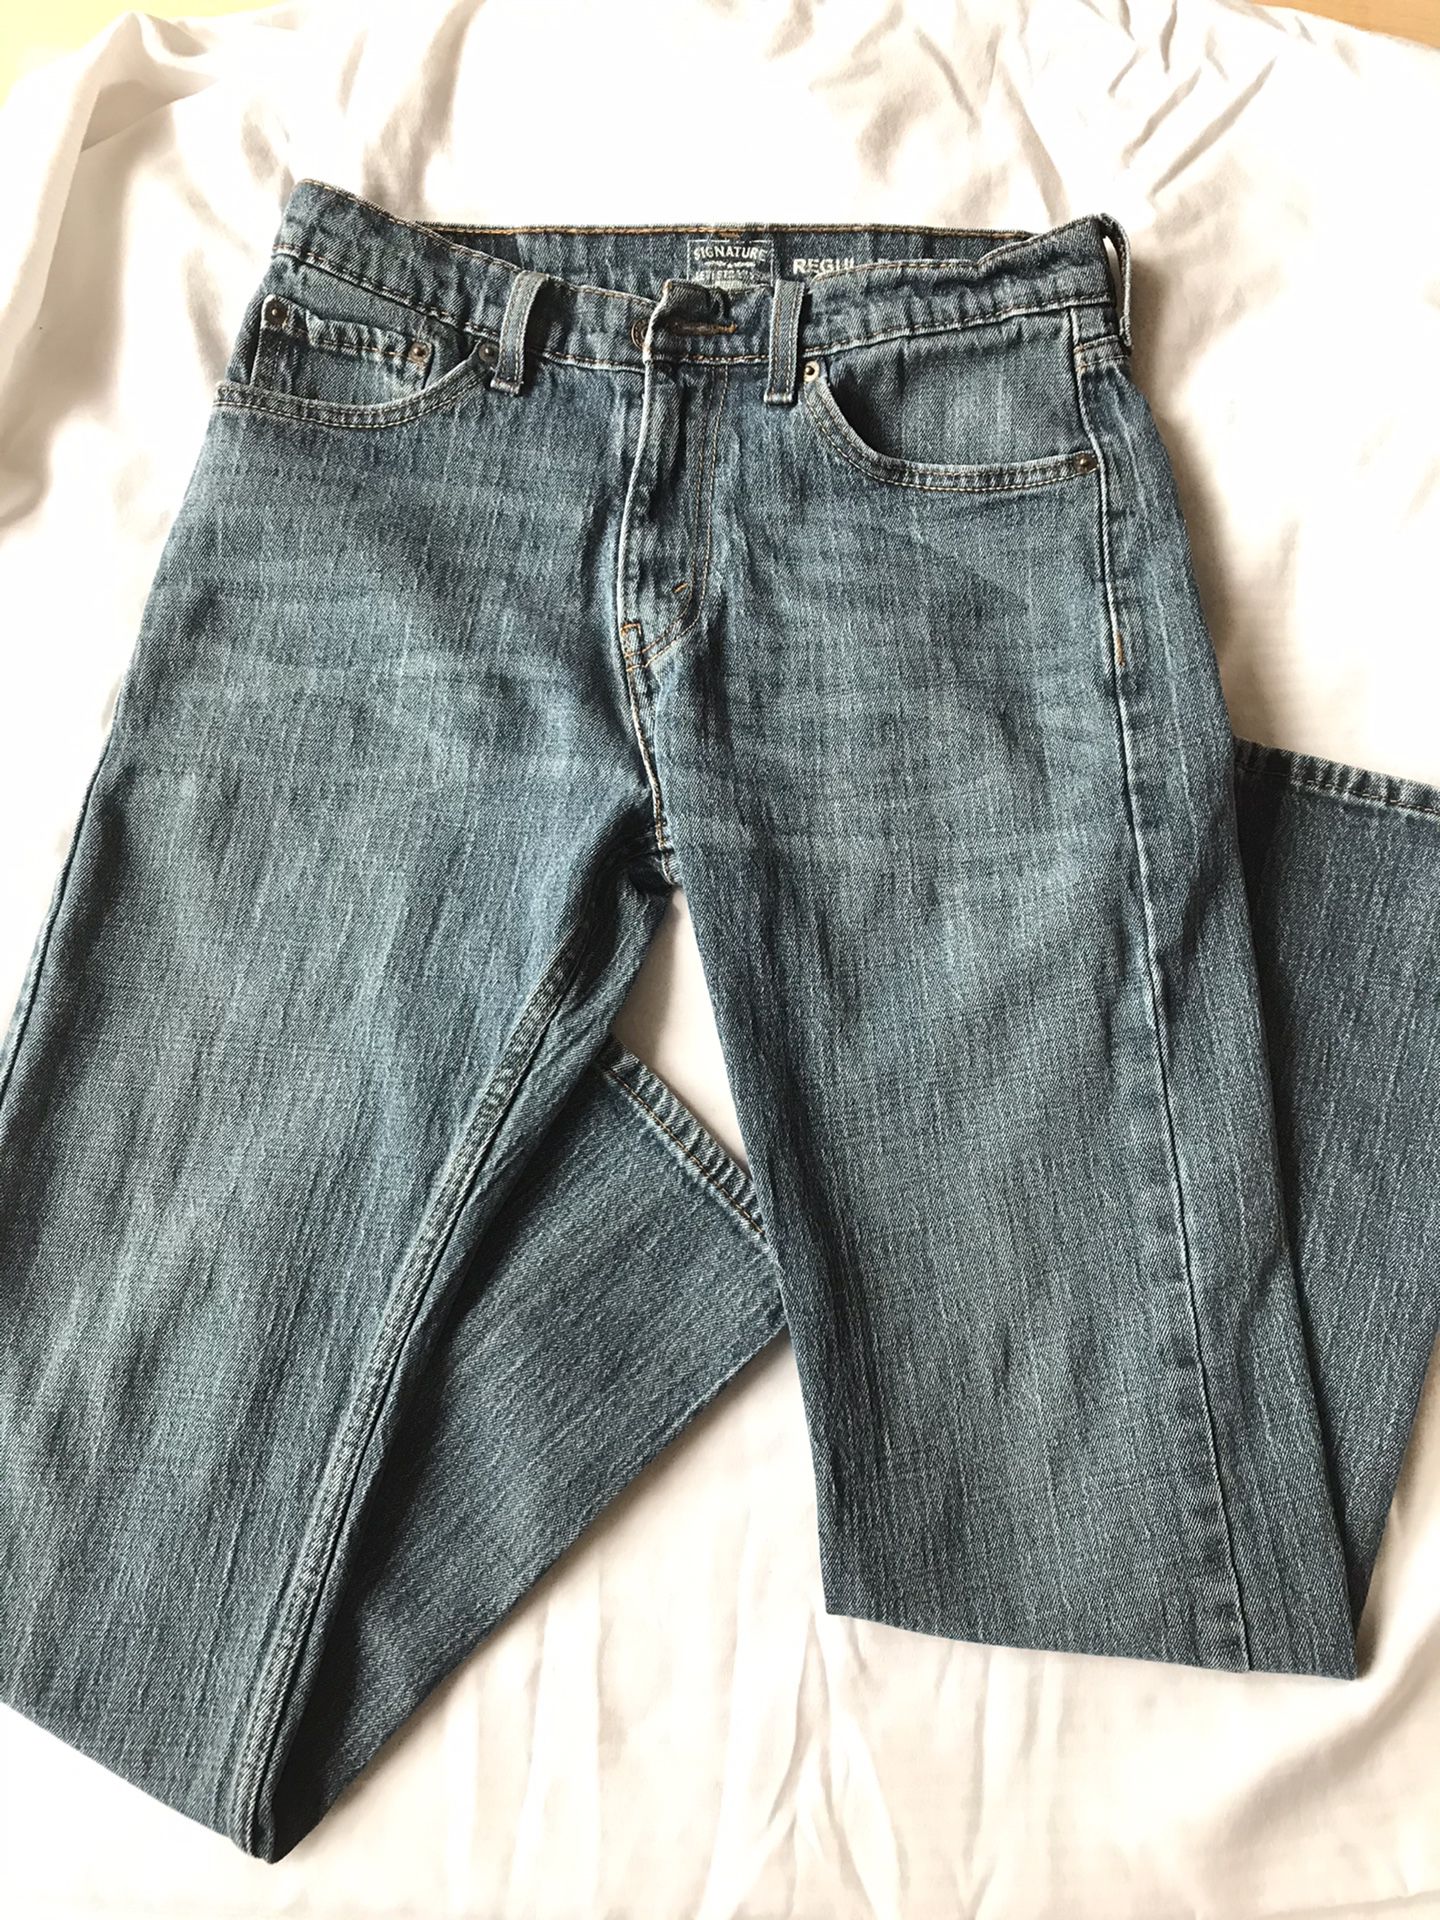 Levi Strauss signature men’s jeans. 30/32